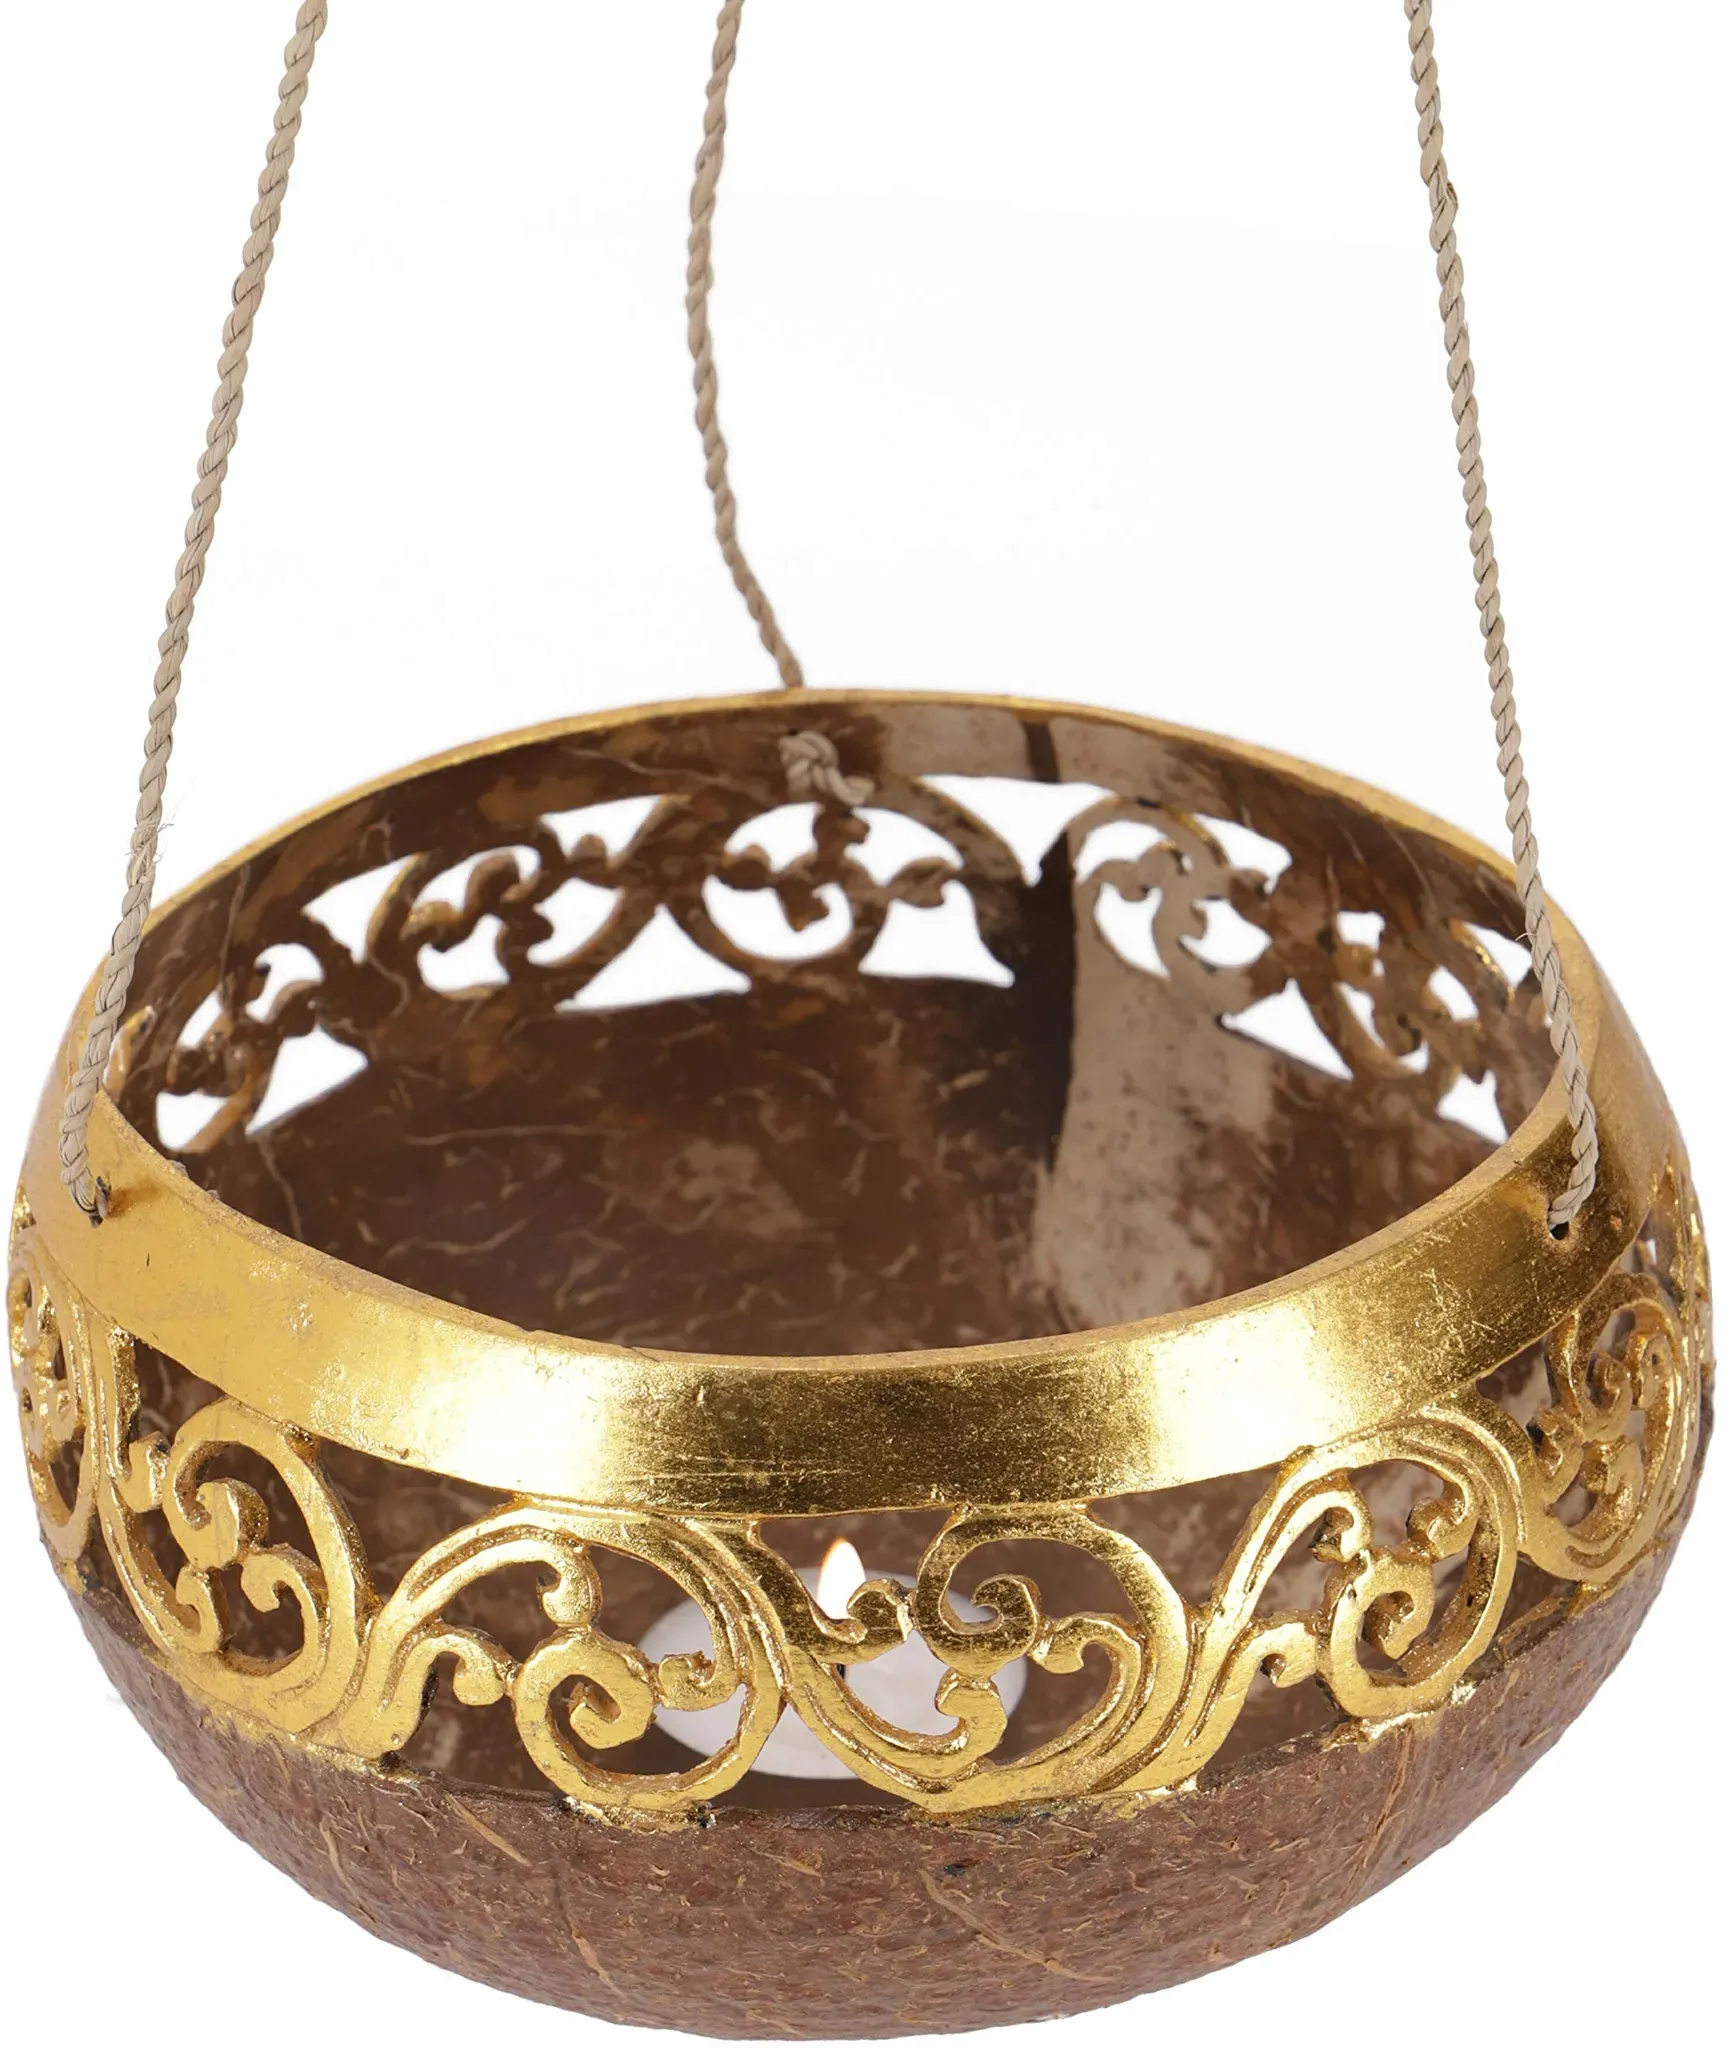 GURU SHOP Kokosnuss Teelicht zum Hängen, Dekotopf - Modell 4, Gold, 10x15x15 cm, Teelichthalter & Kerzenhalter